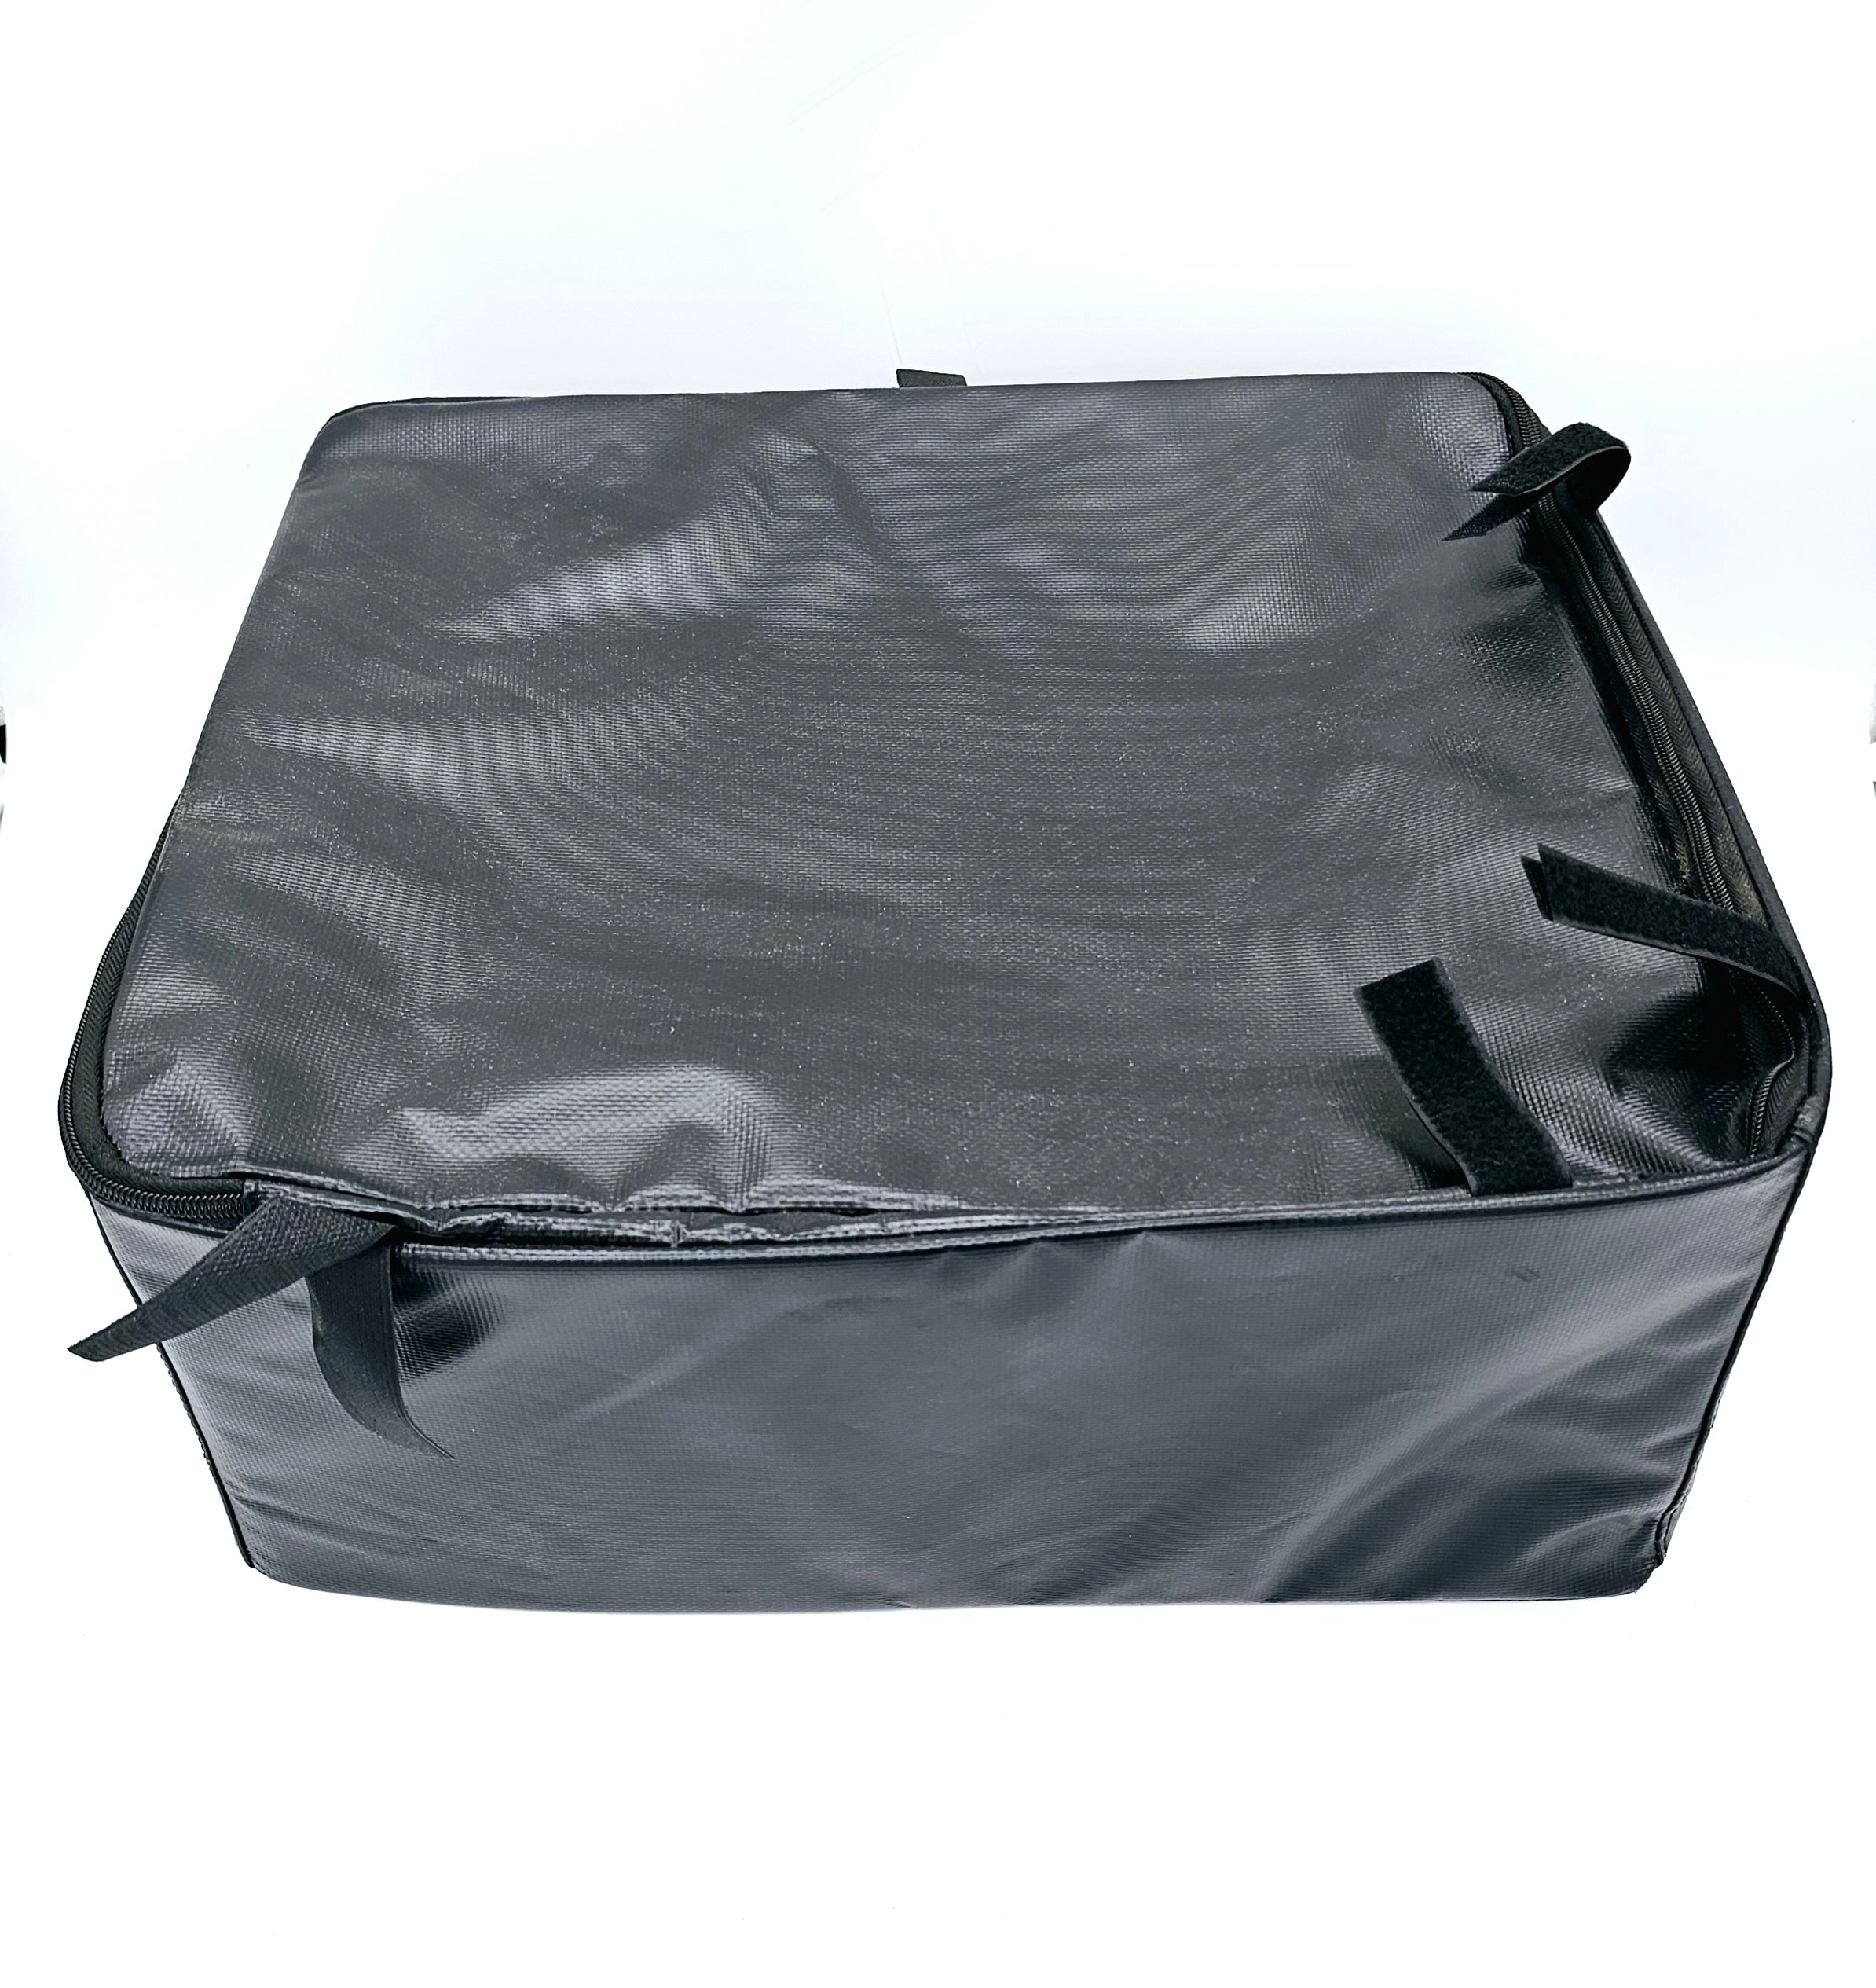 Tri-Cycle Rear Bag